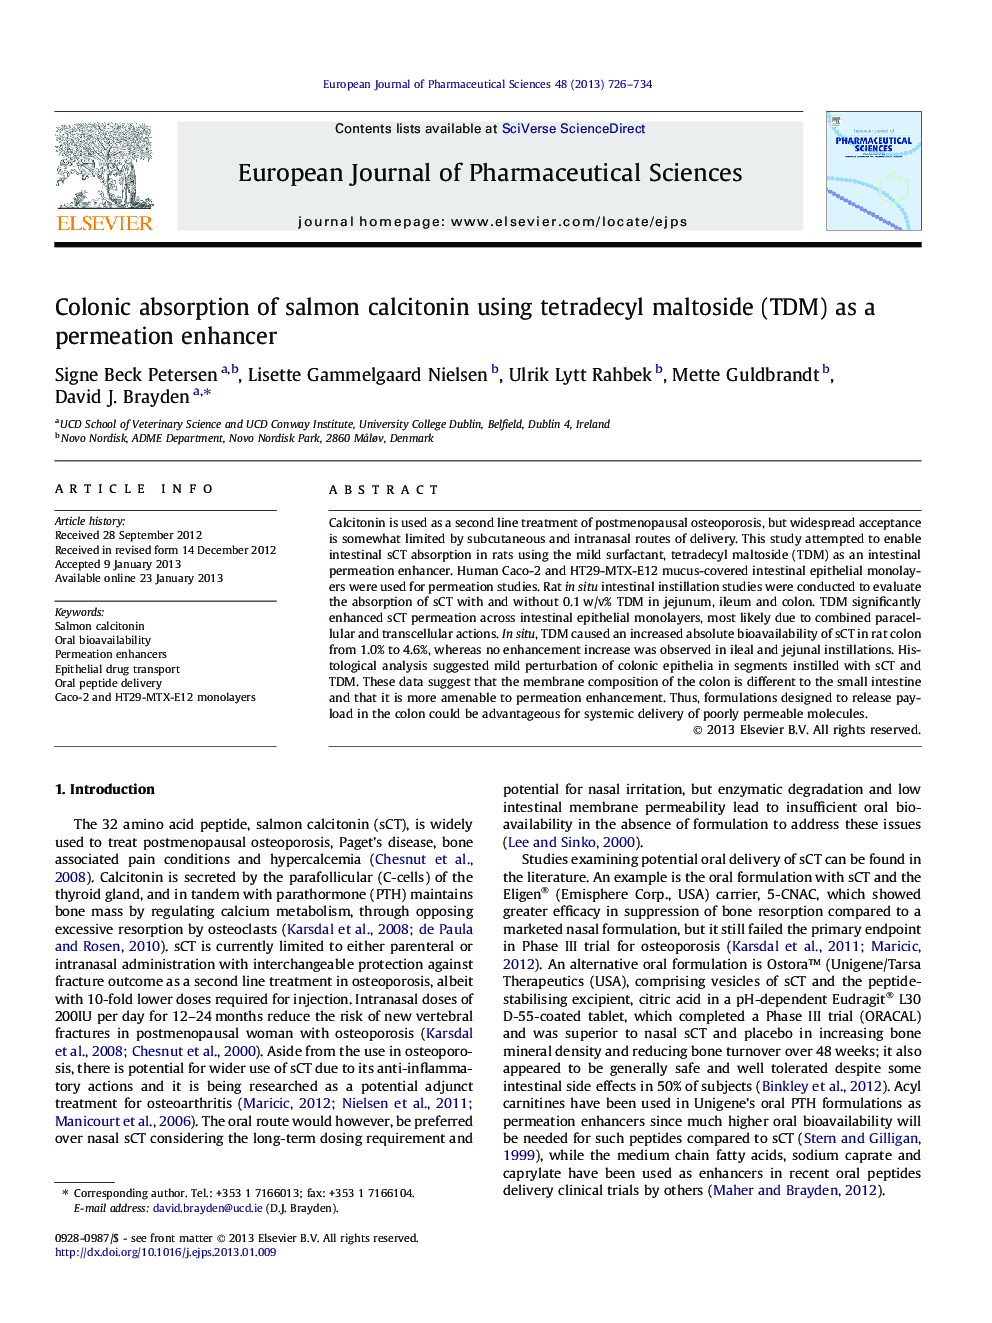 Colonic absorption of salmon calcitonin using tetradecyl maltoside (TDM) as a permeation enhancer